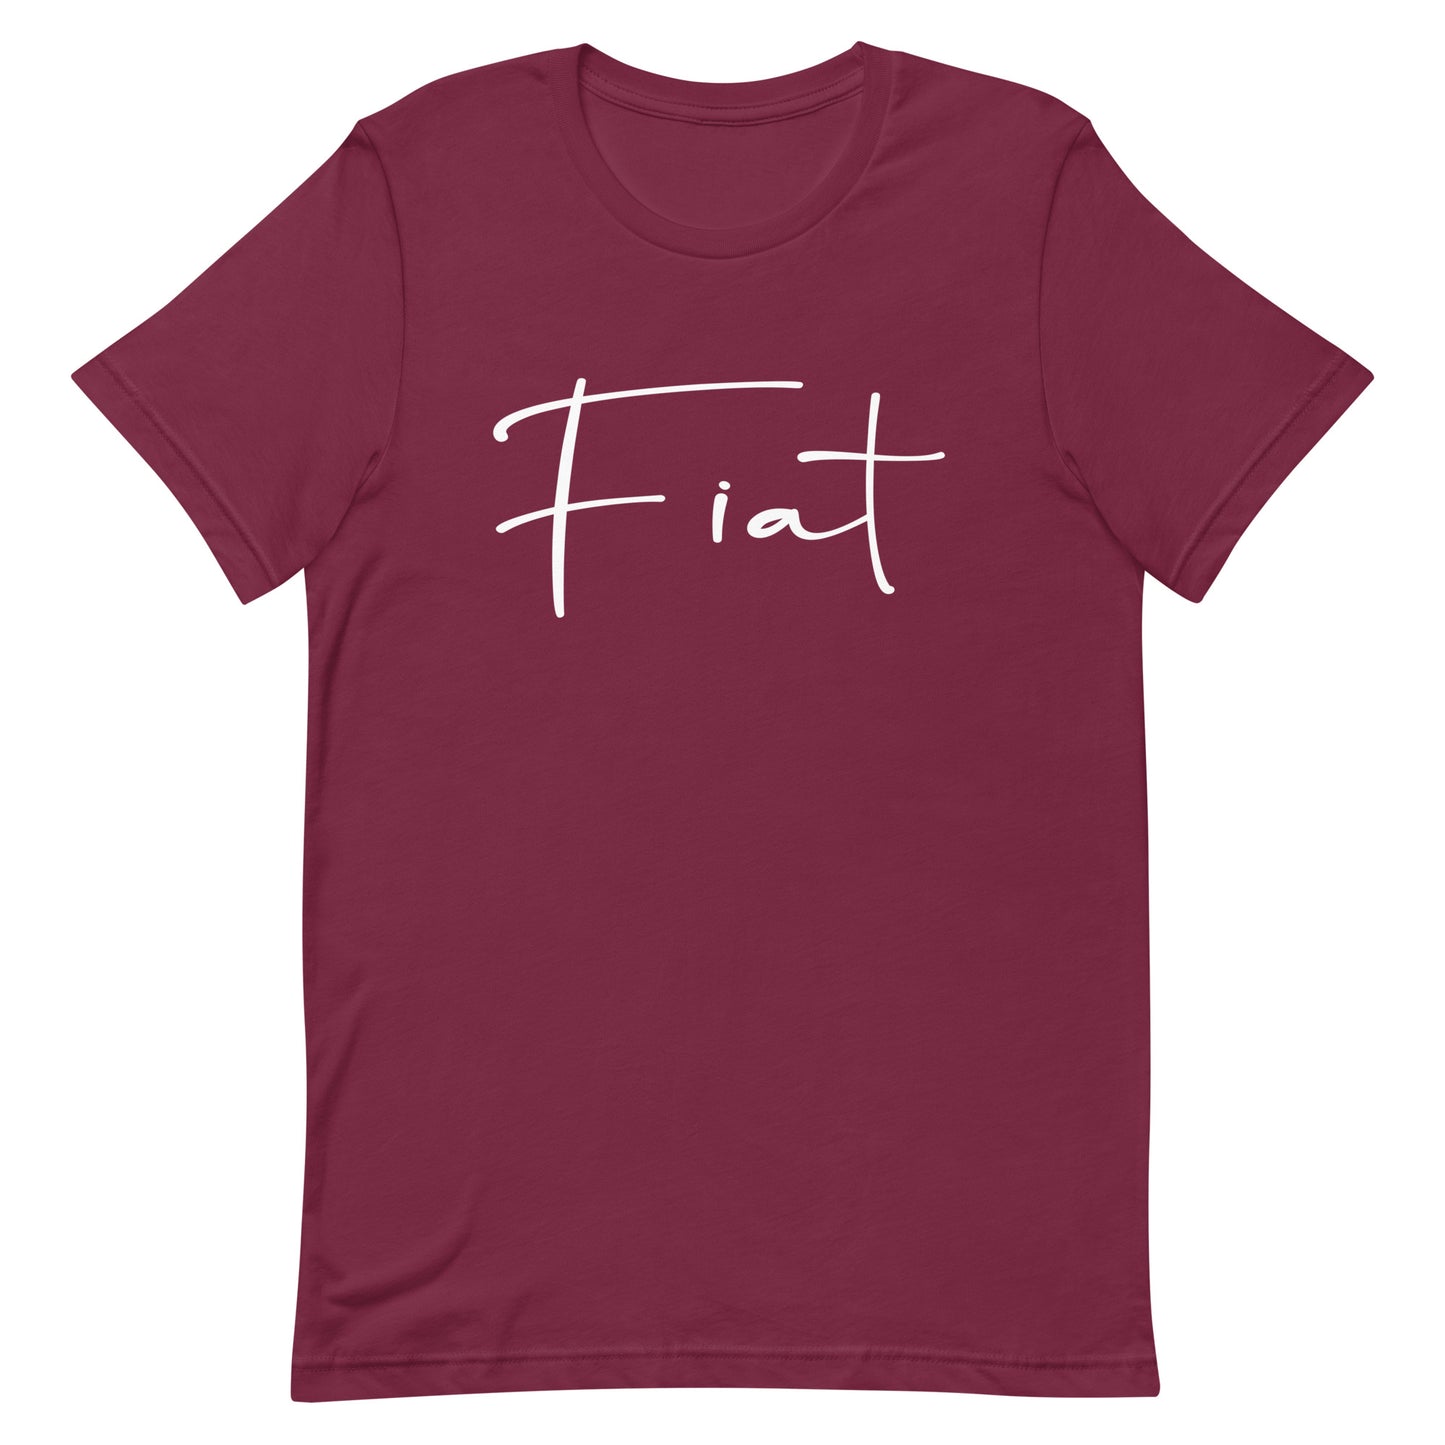 Fiat T-shirt in Maroon